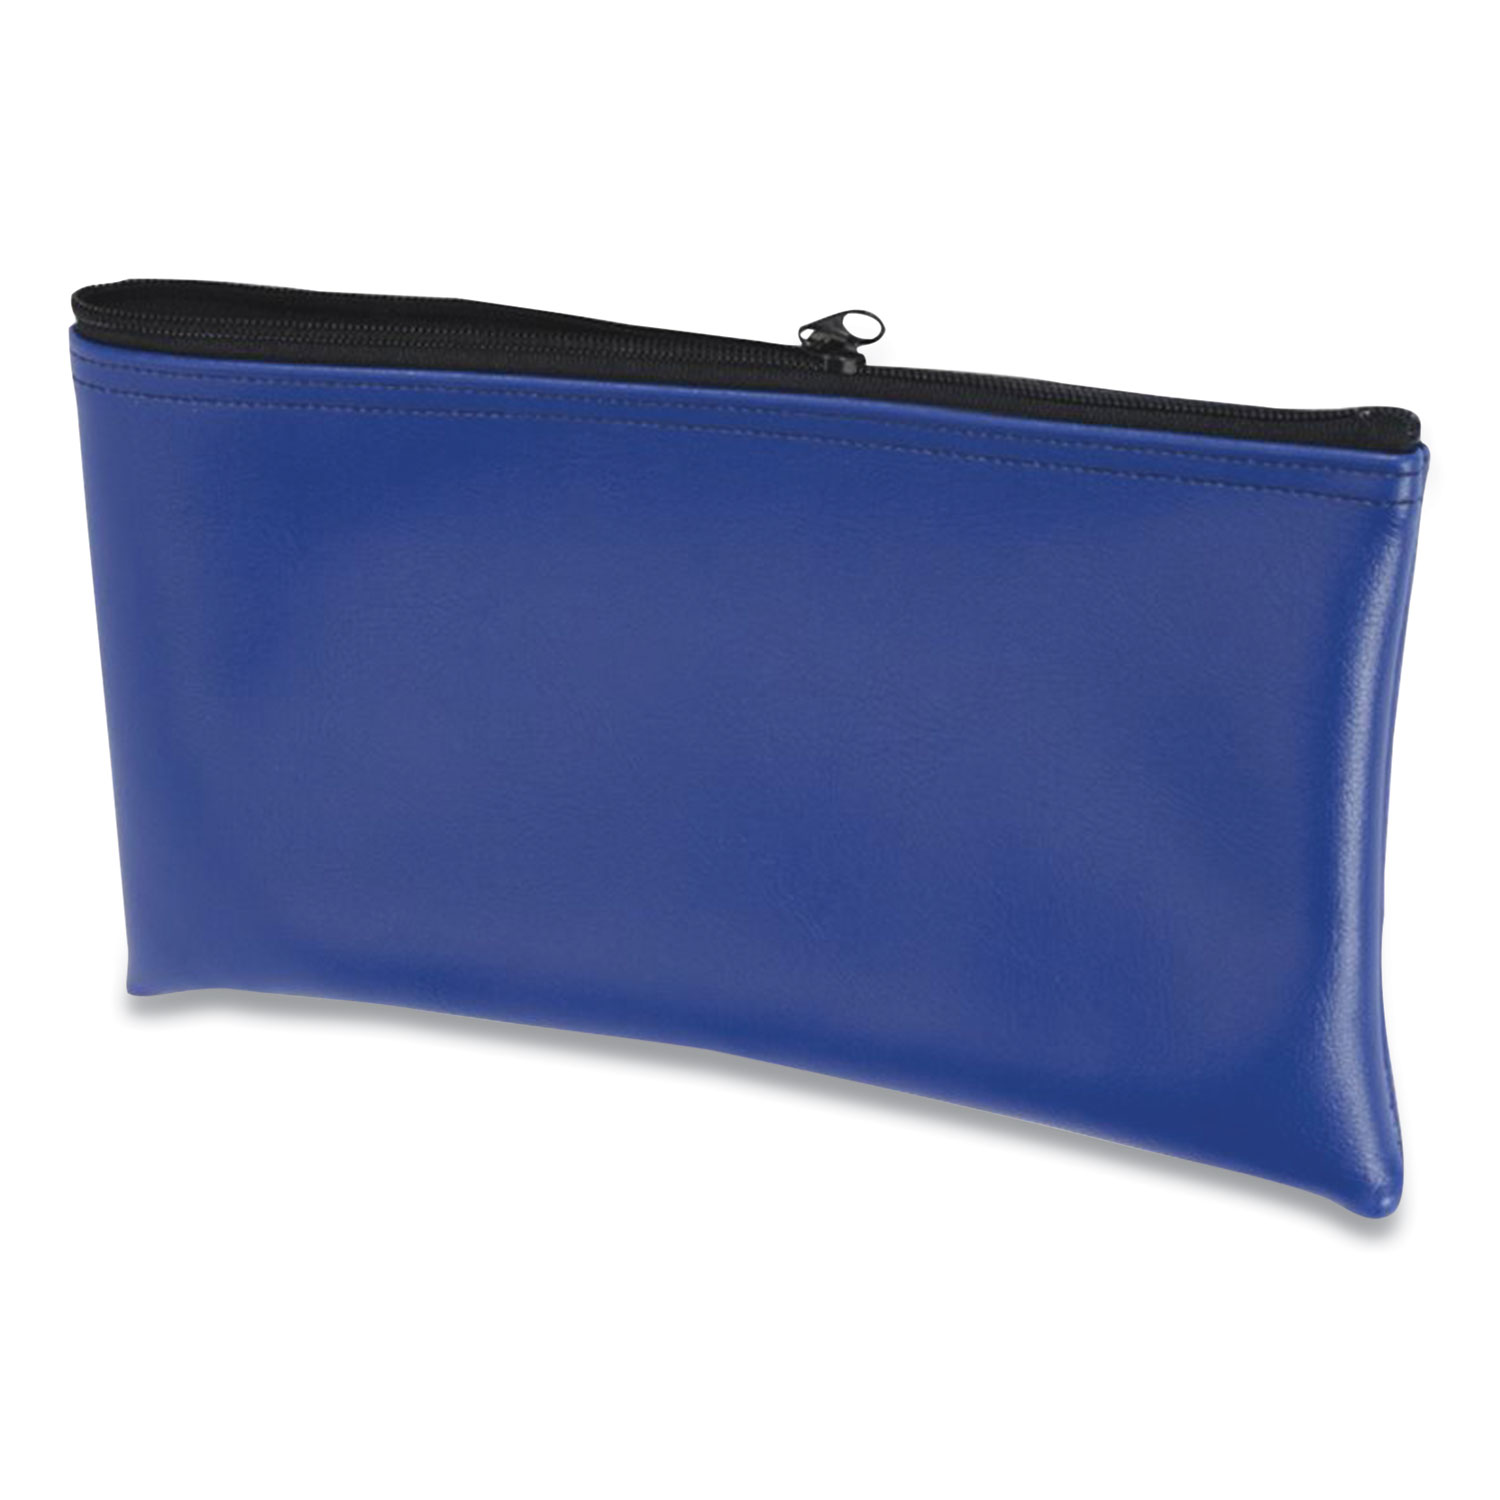  CONTROLTEK 530979 Multipurpose Zipper Bags, 11 x 6, Vinyl, Blue (CNK24421423) 